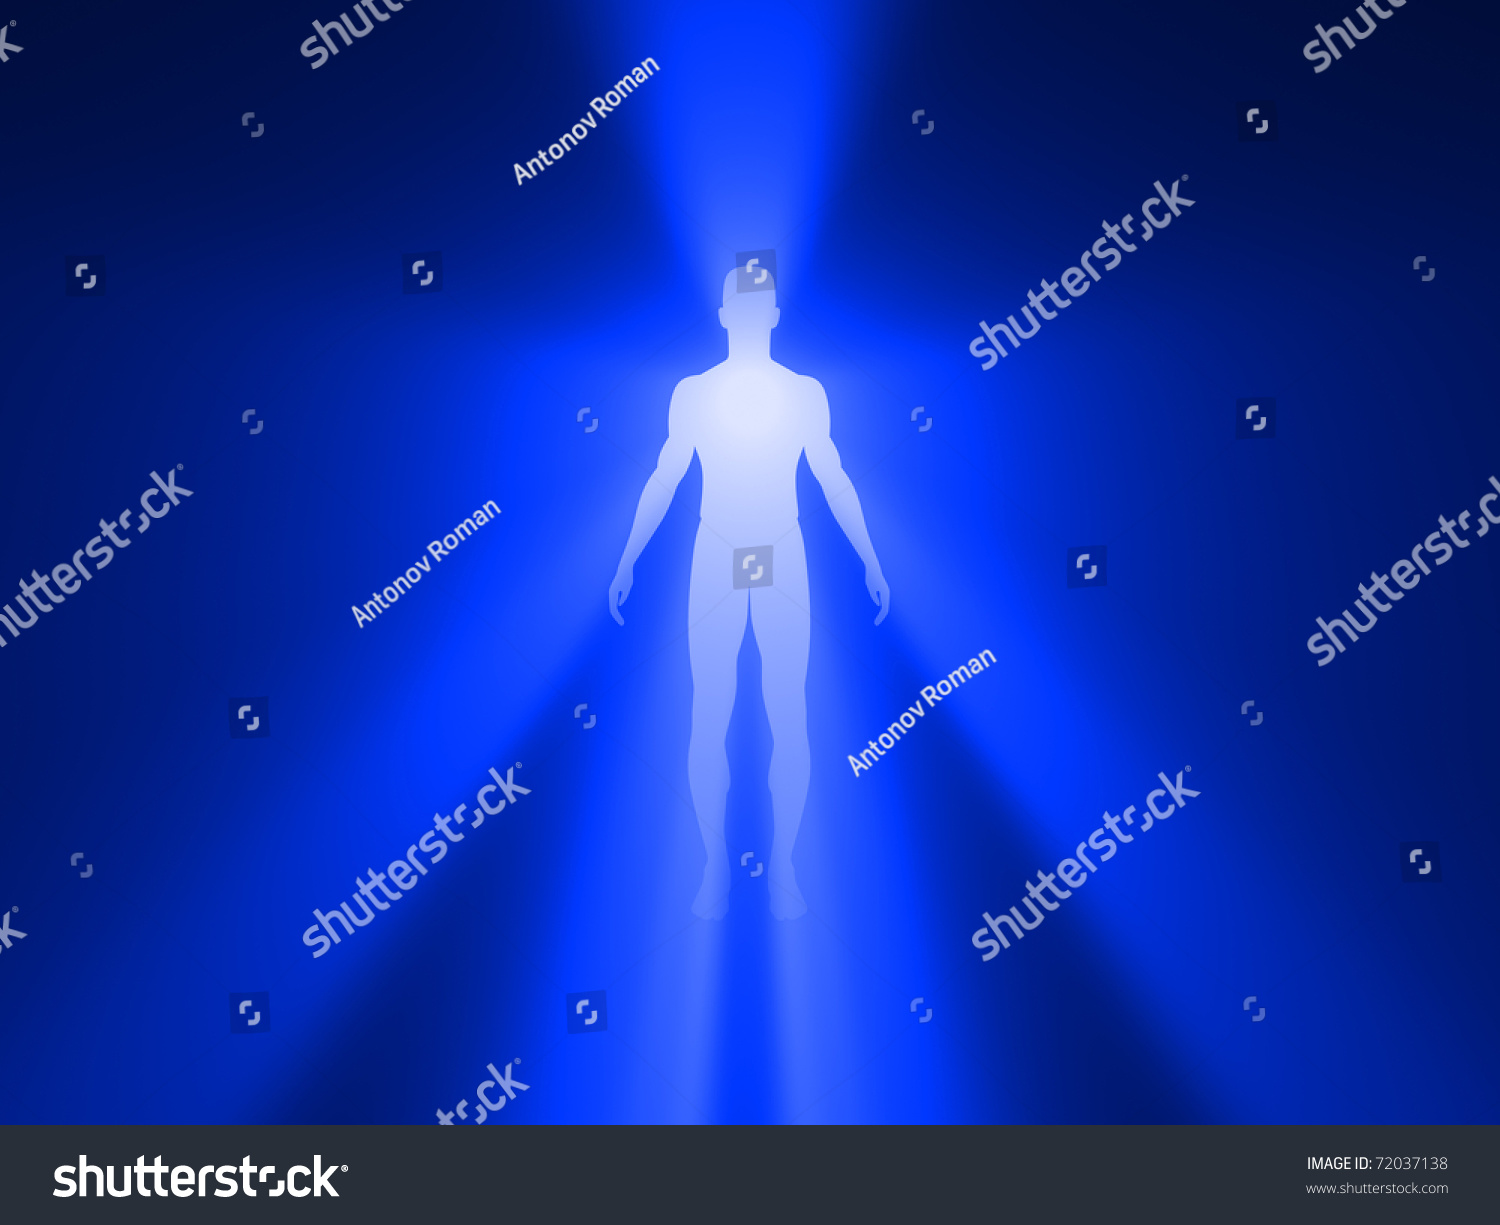 Silhouette Of Man Radiating Light Stock Photo 72037138 : Shutterstock